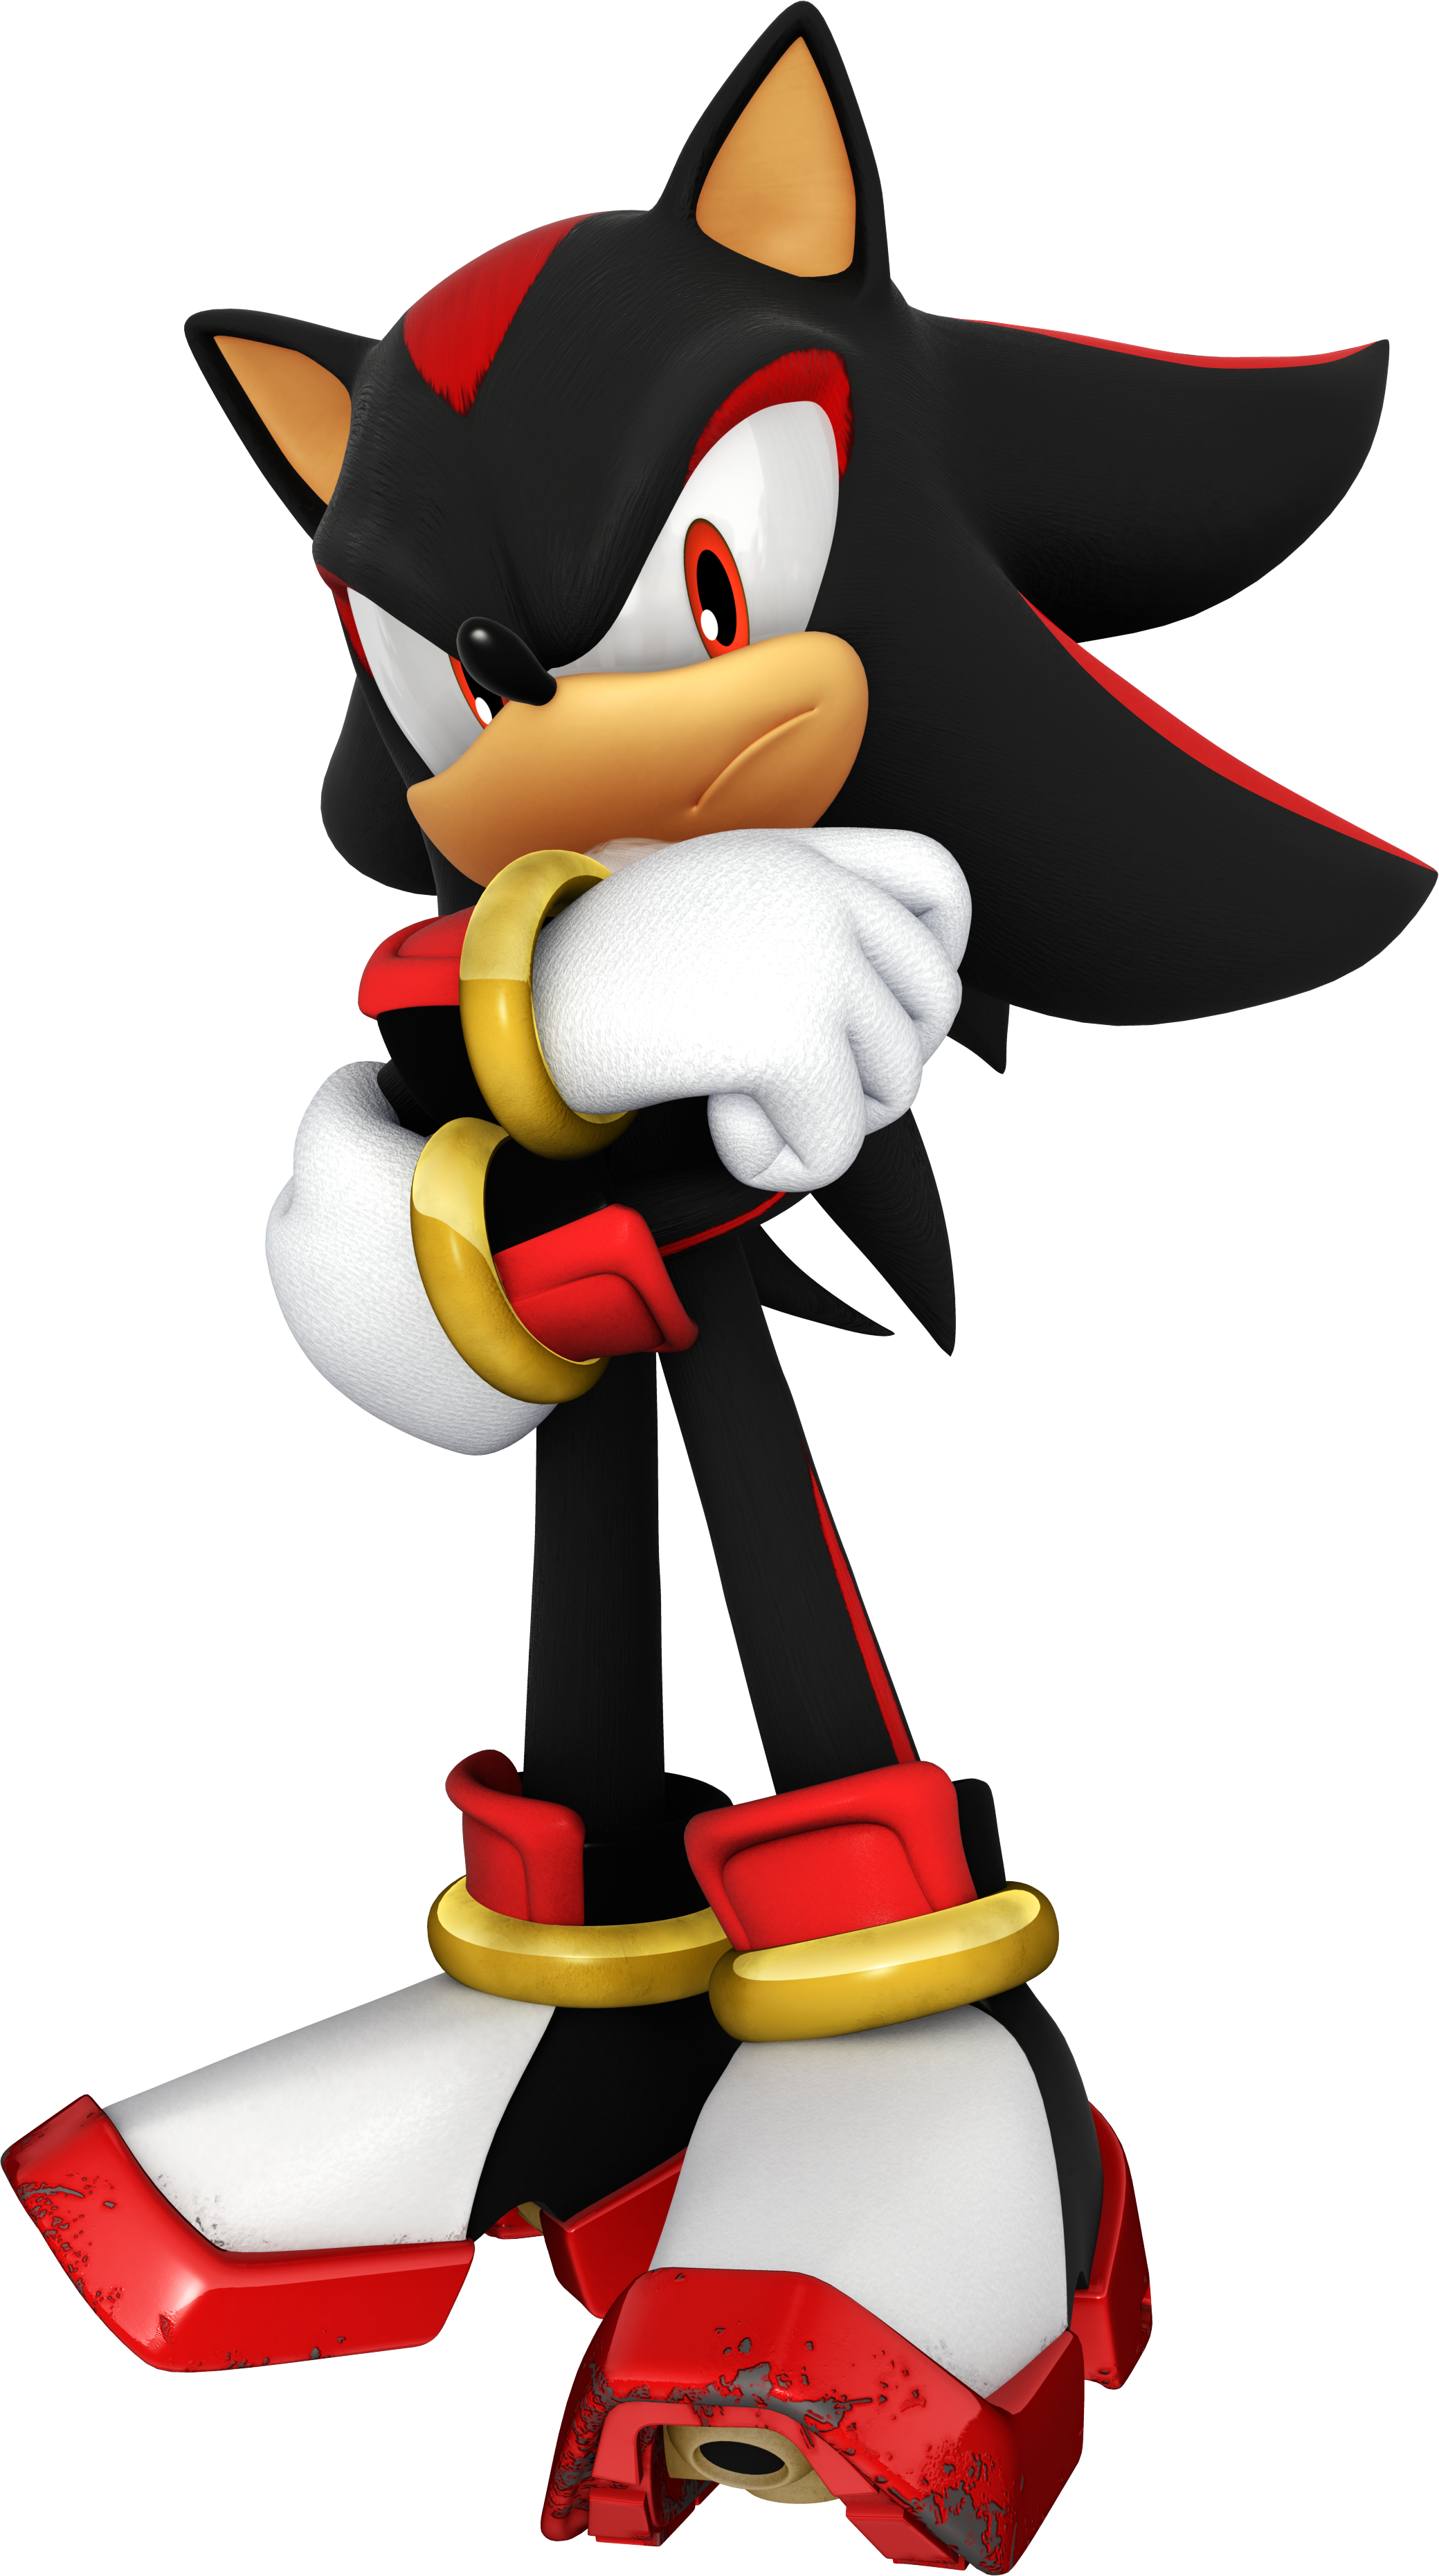 Shadow the Hedgehog, Sonic The Hedgehog Movie Wiki